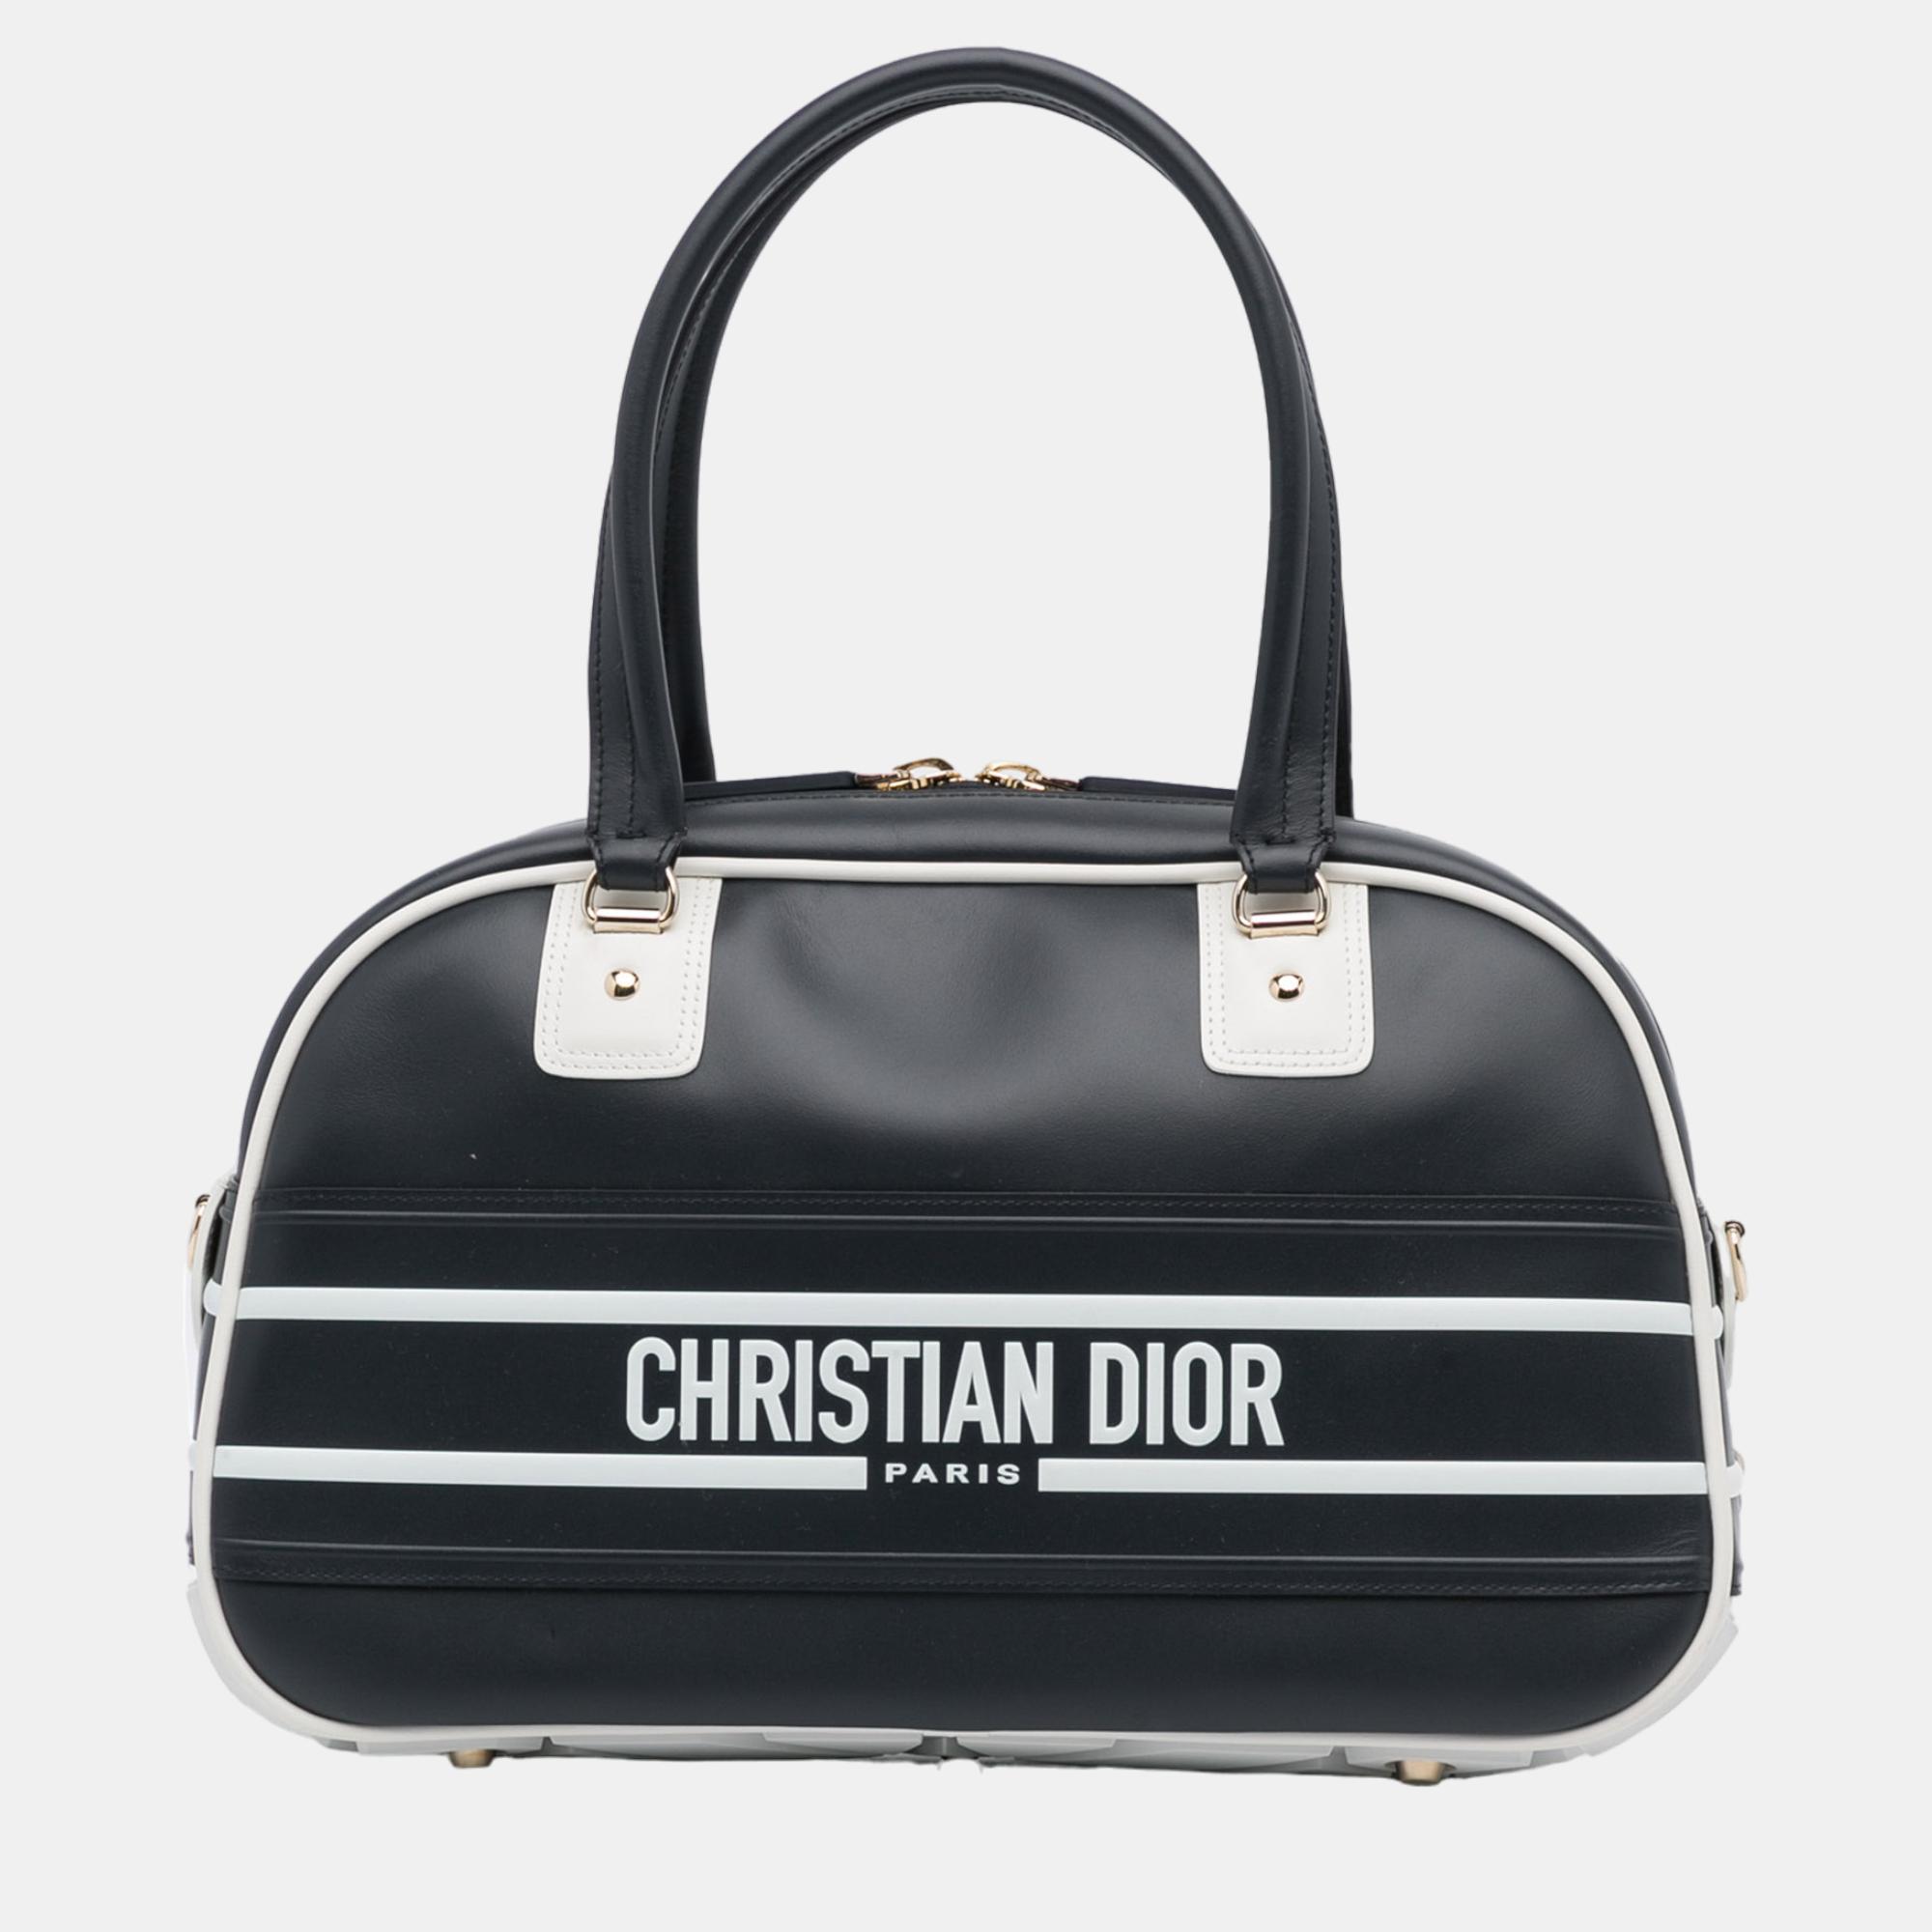 Dior black vibe satchel